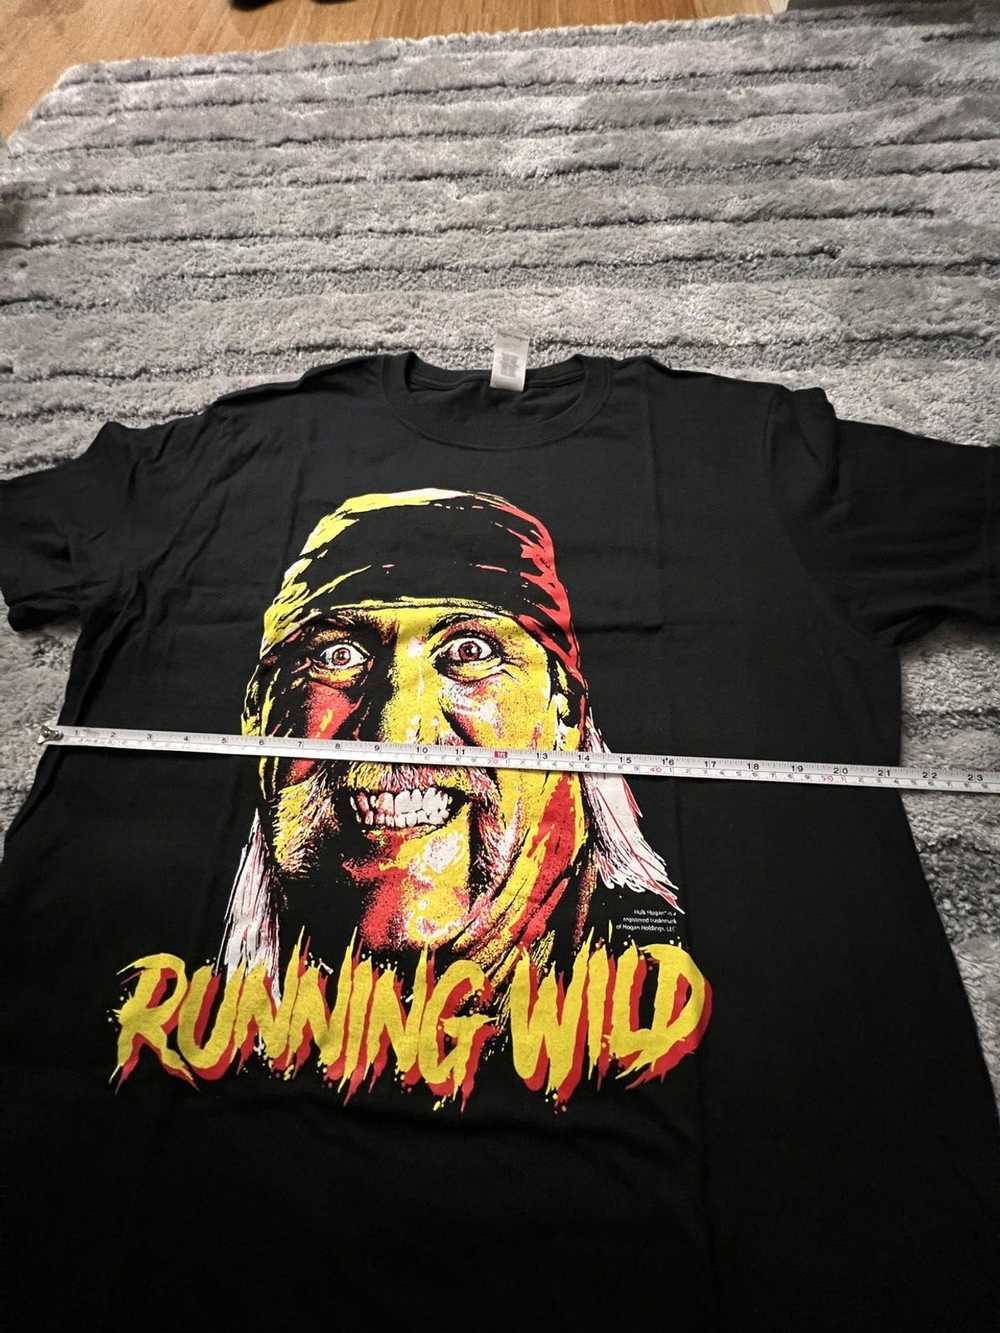 Gildan × Wwe Hulk Hogan t shirt - image 6